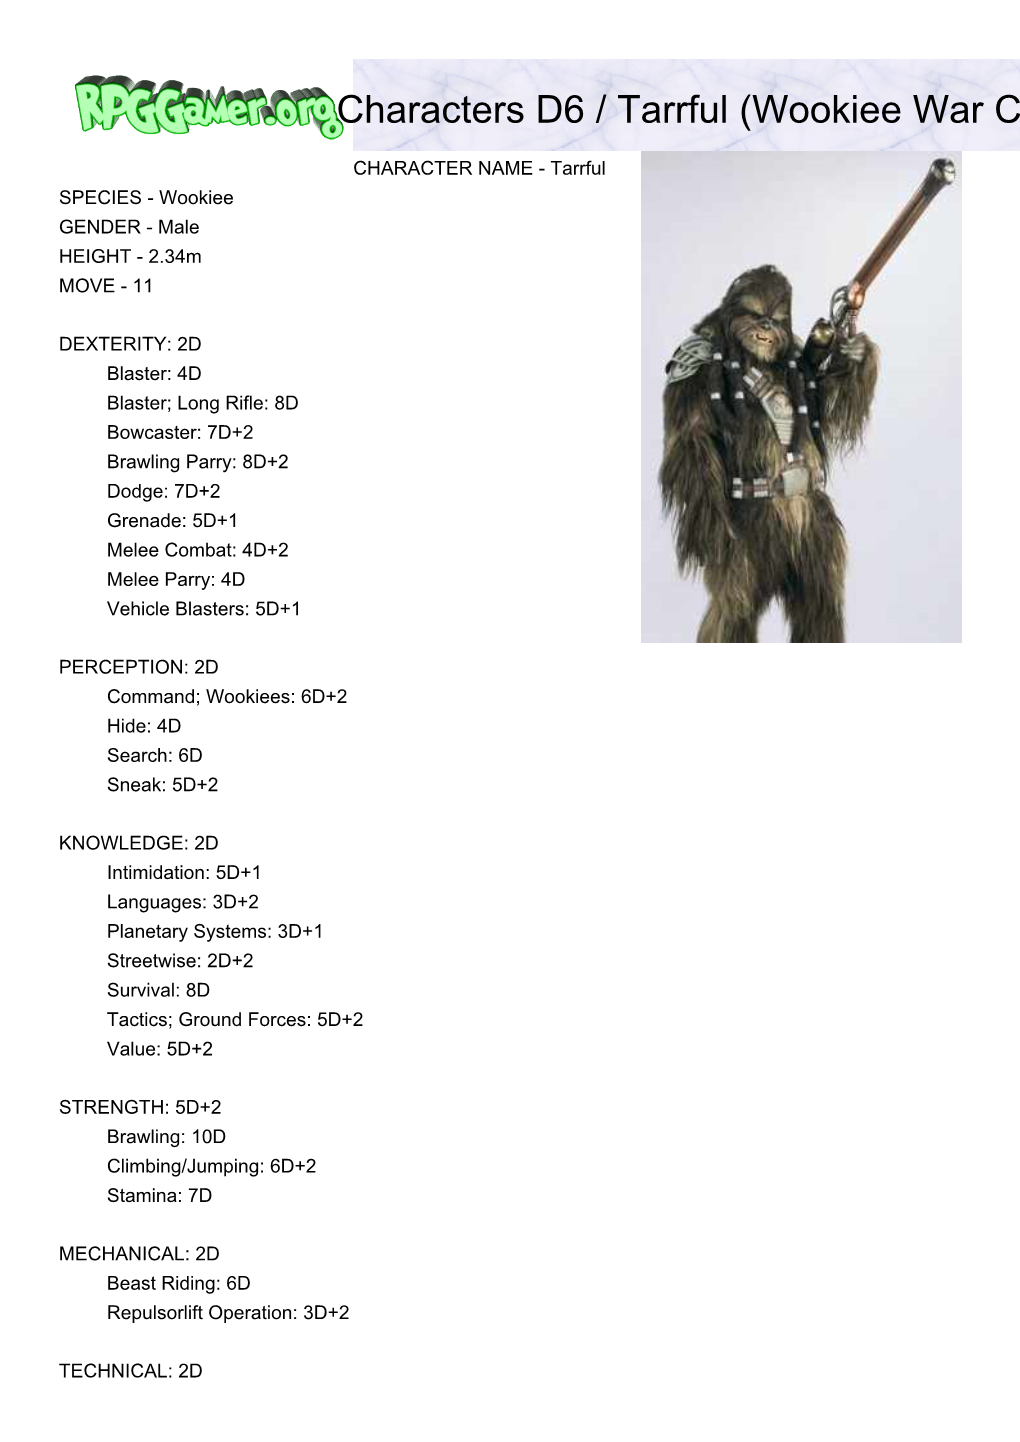 Characters D6 / Tarrful (Wookiee War Chief)